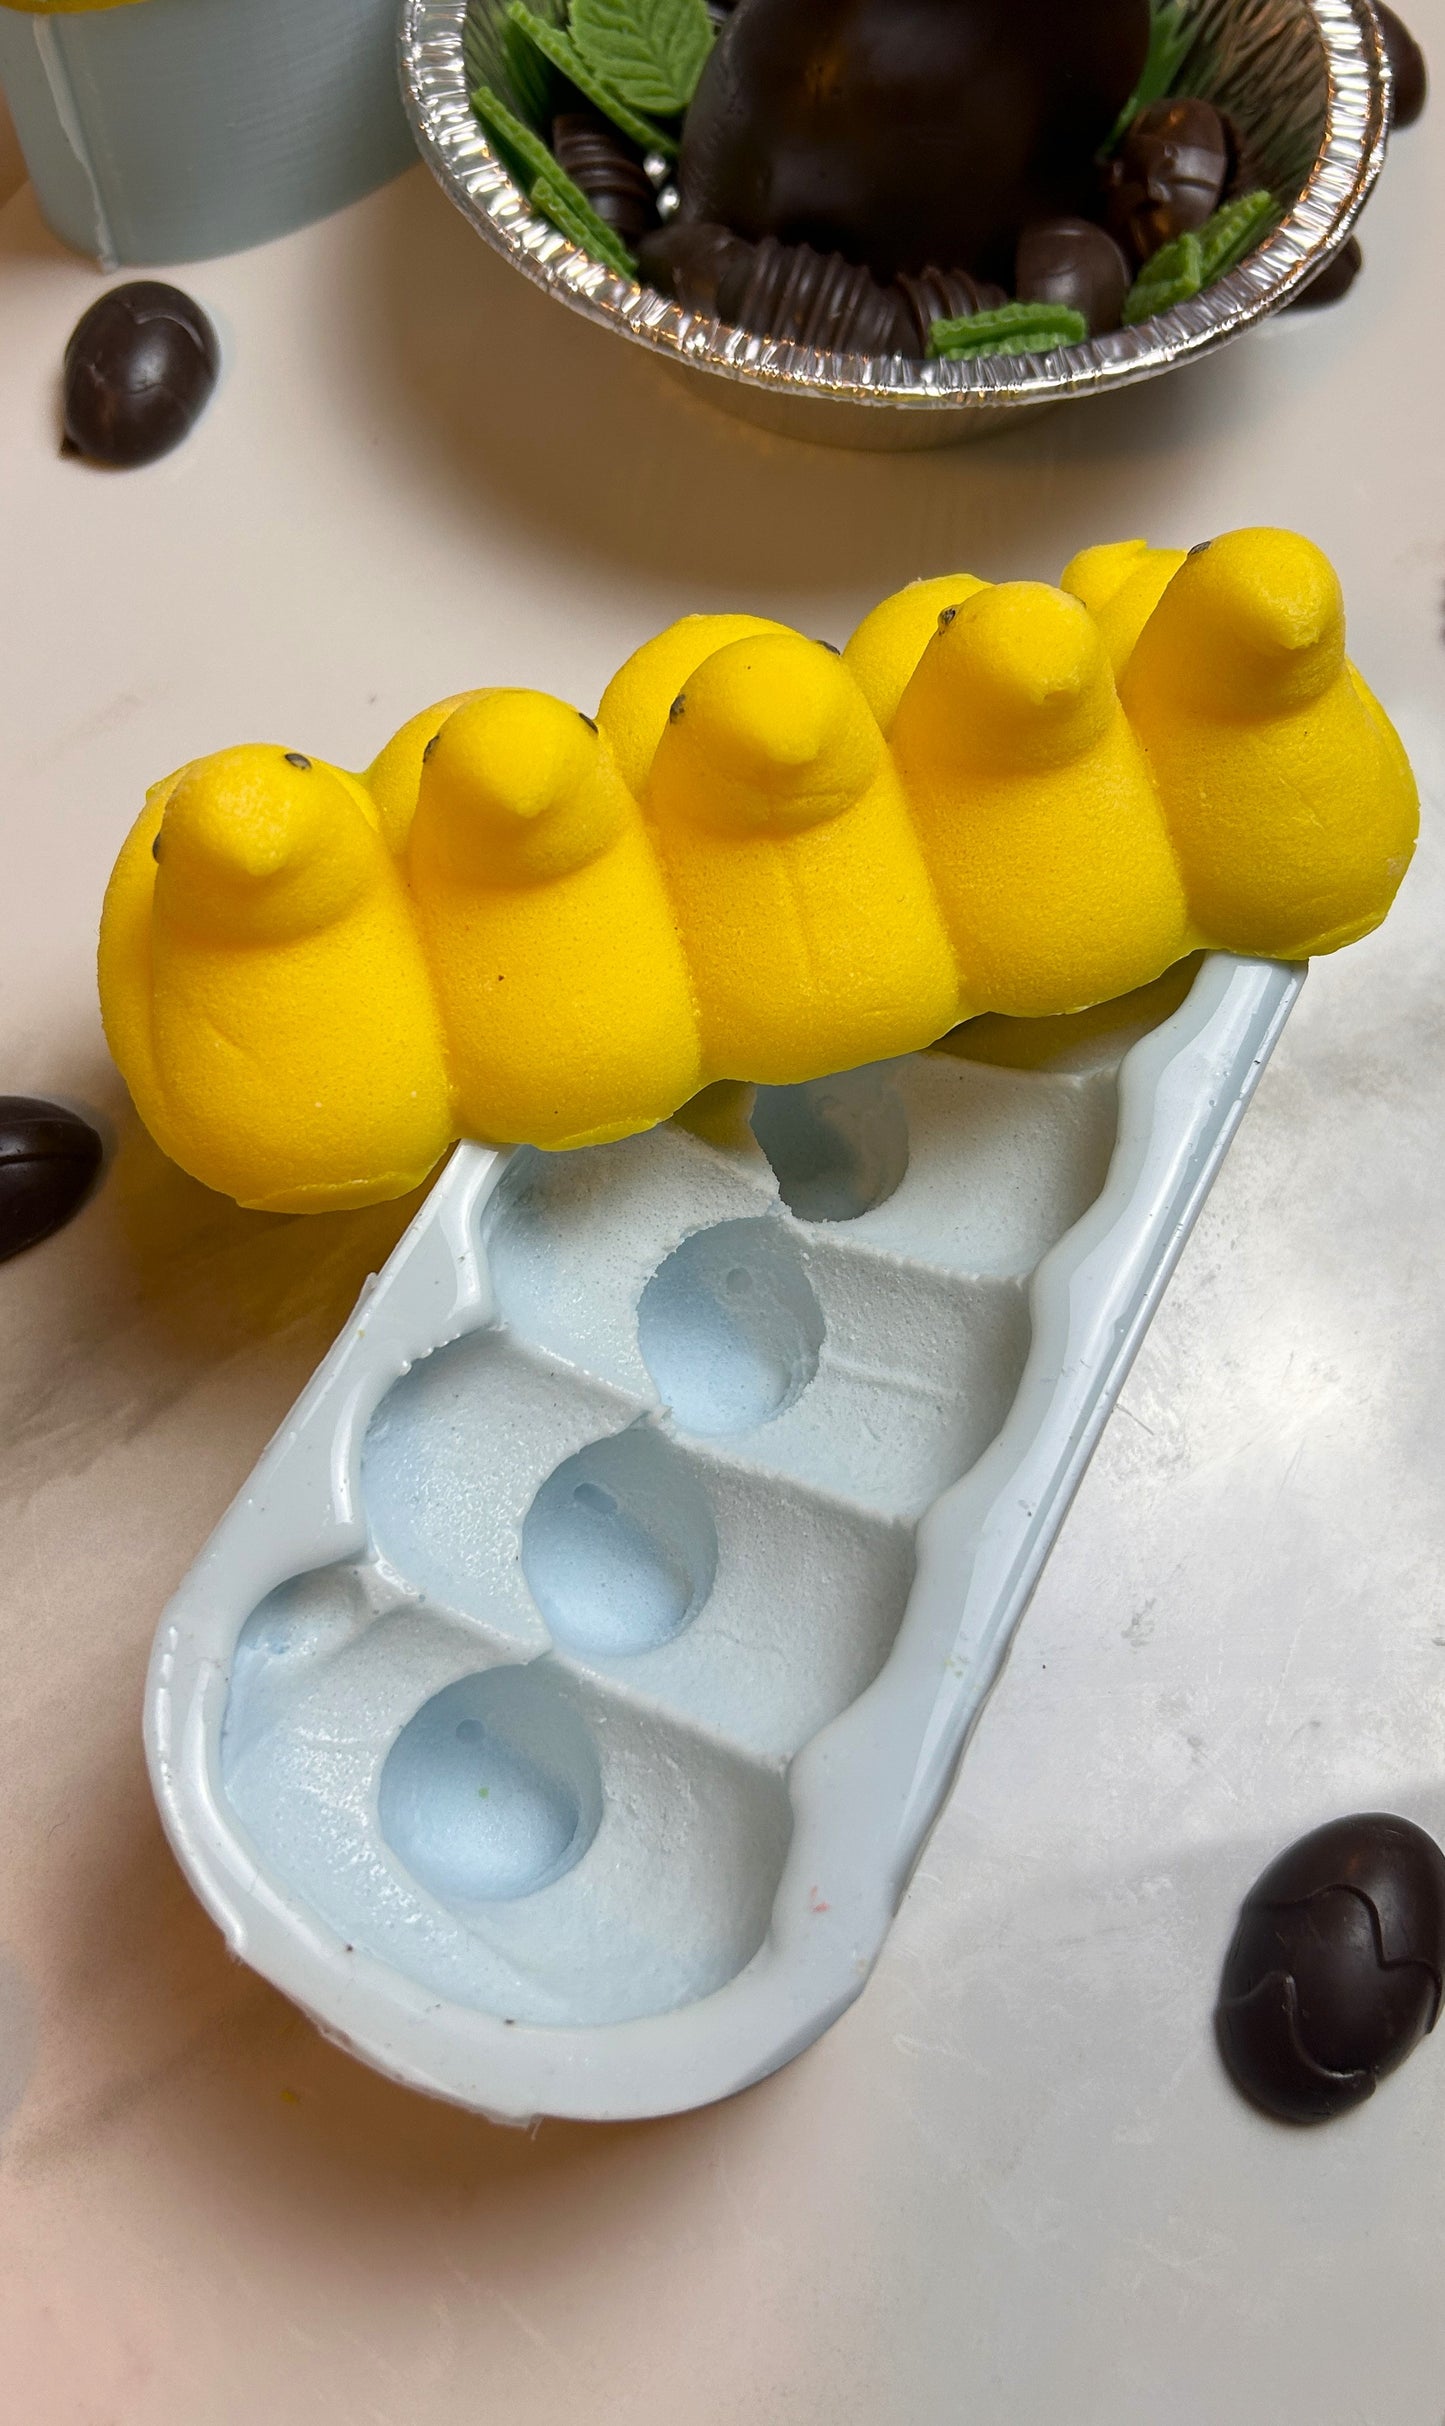 Silicone Mold - 5/4 Cavity Marshmallow Chicks / Bunnies